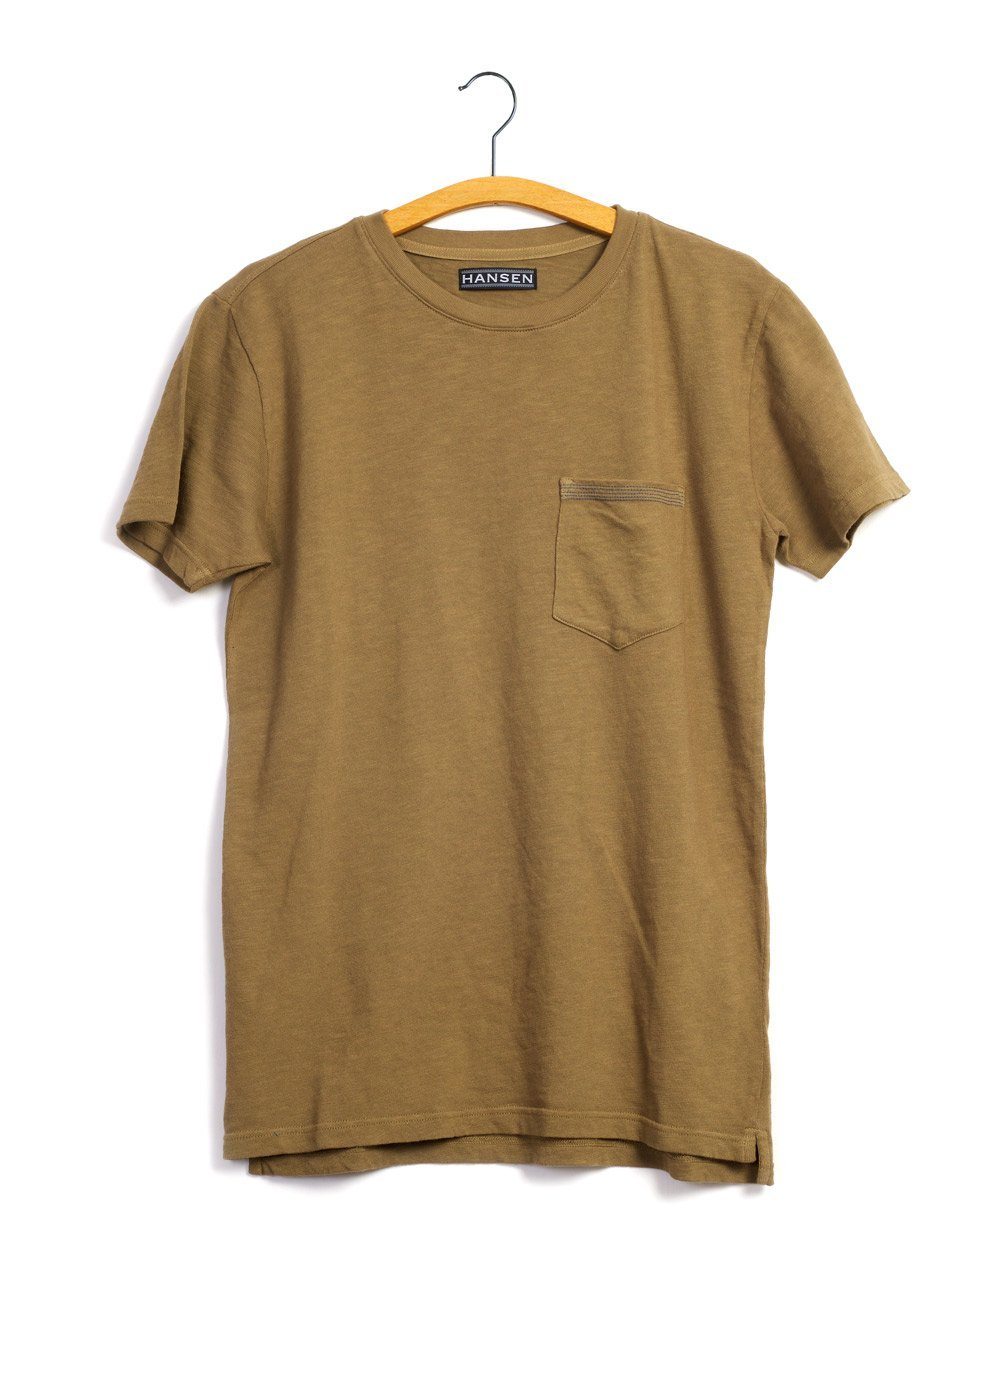 JAMES | Slub Yarn Pocket T| Khaki | €95 -HANSEN Garments- HANSEN Garments